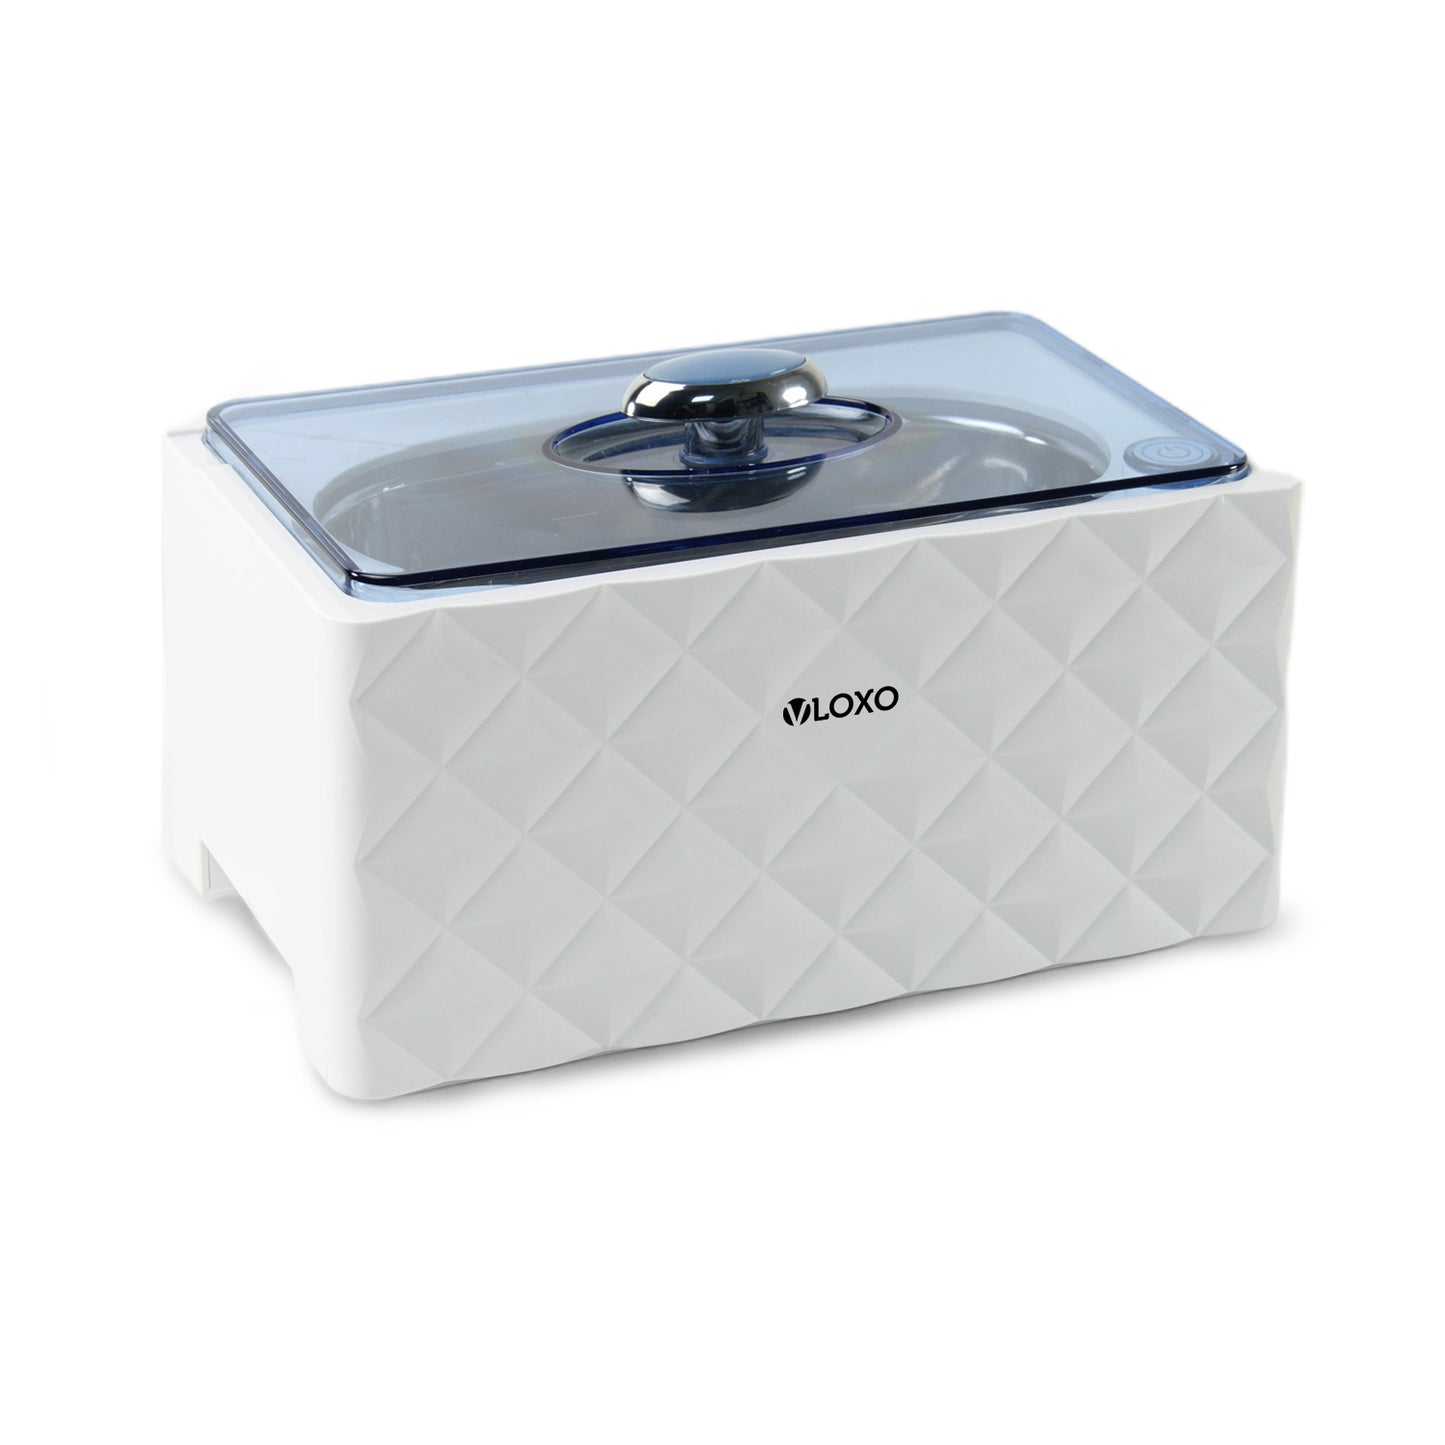 VLOXO D-3000 Ultrasonic Jewelry Cleaner